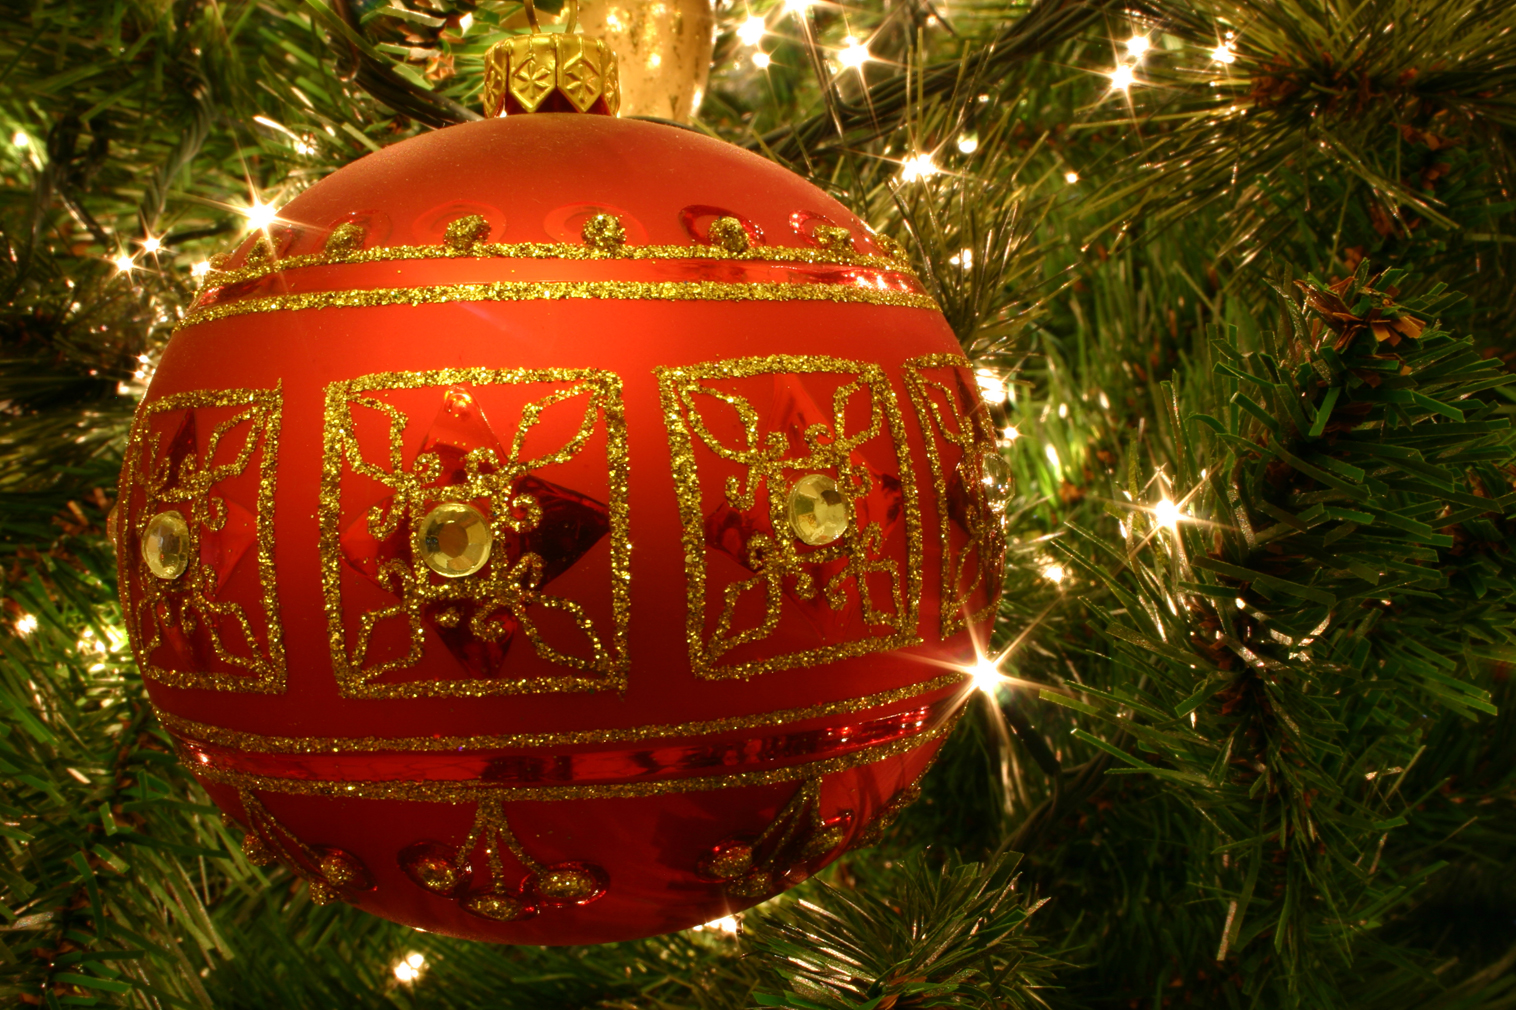 on-ornamentation-and-christmas-trees-hemiola07-s-blog